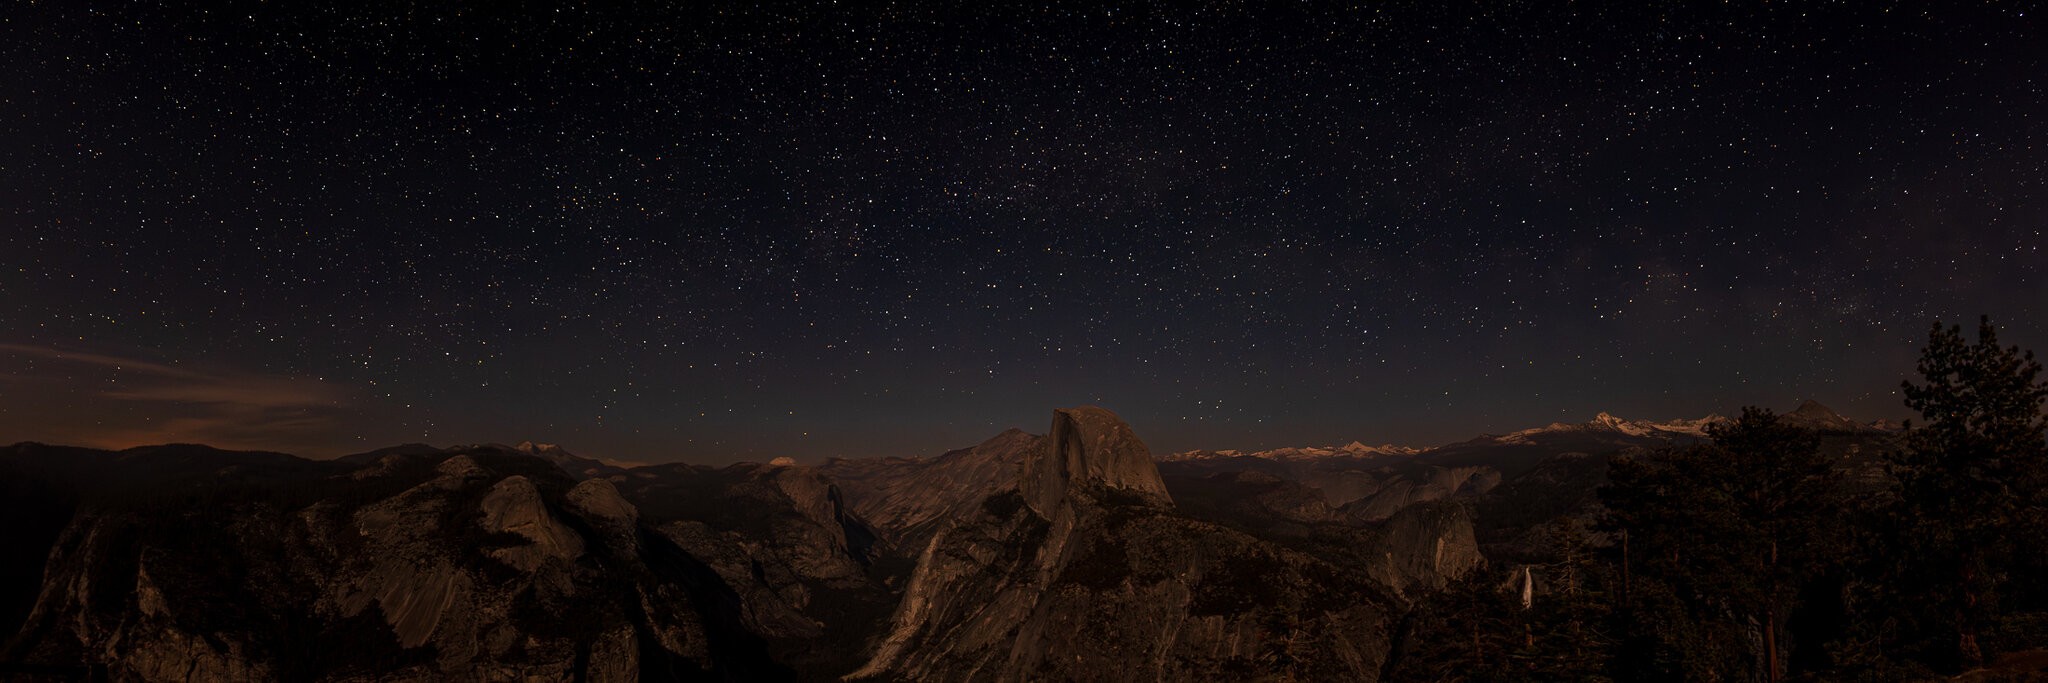 Yosemite-2015-1592-Enhanced-NR-Pano.jpg